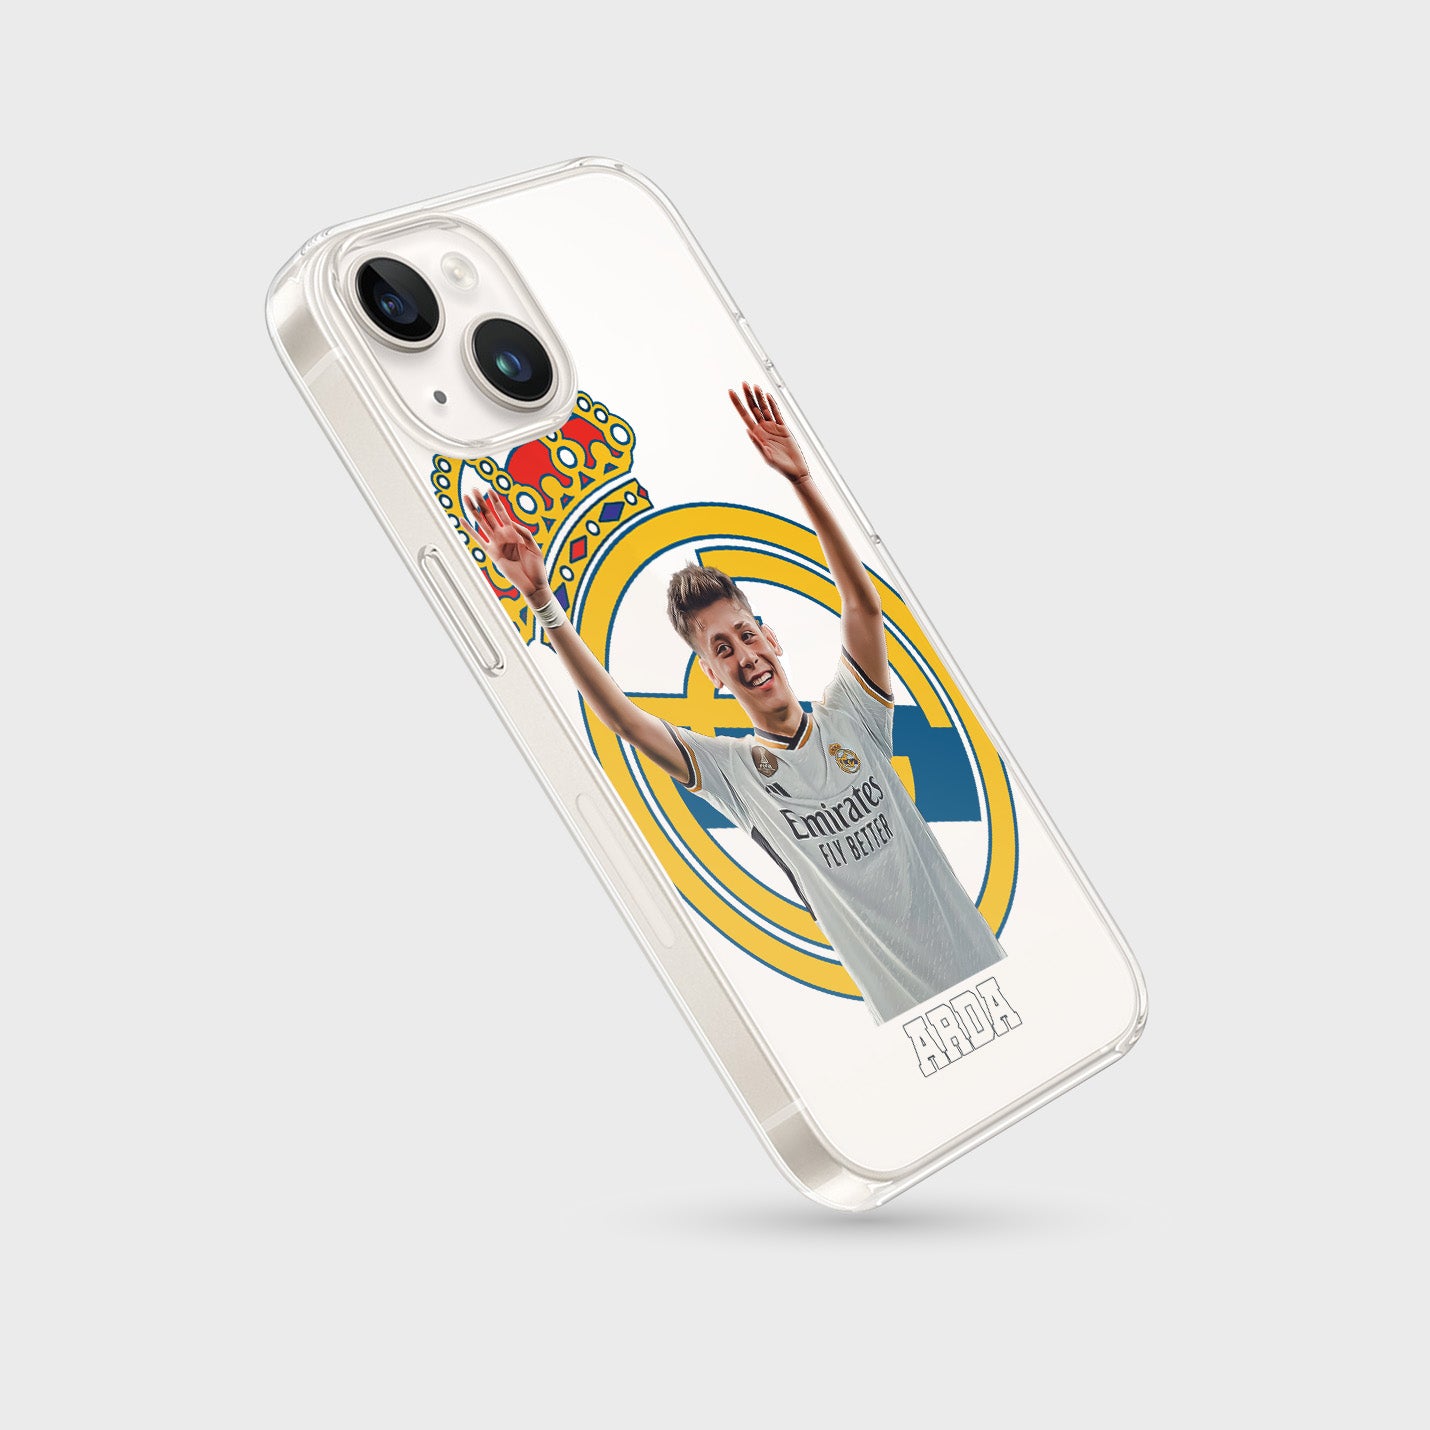 Arda Güler Real Madrid Hülle mit Wunschname - 1instaphone